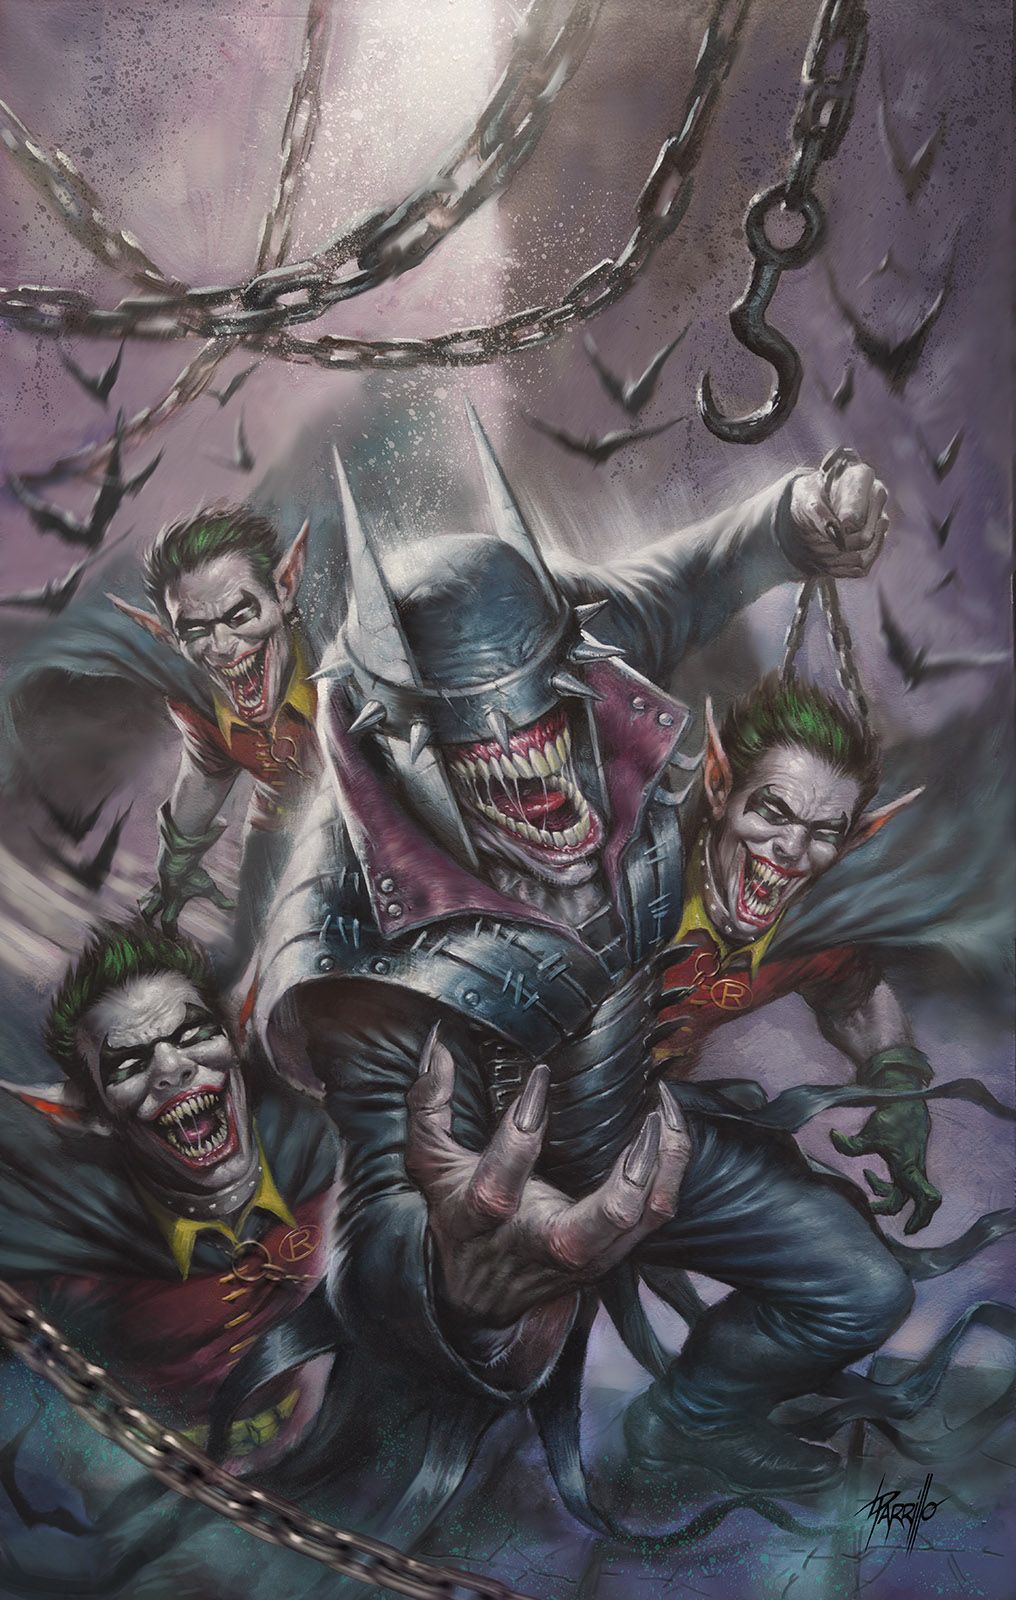 Batman who laughs, horror, HD phone wallpaper